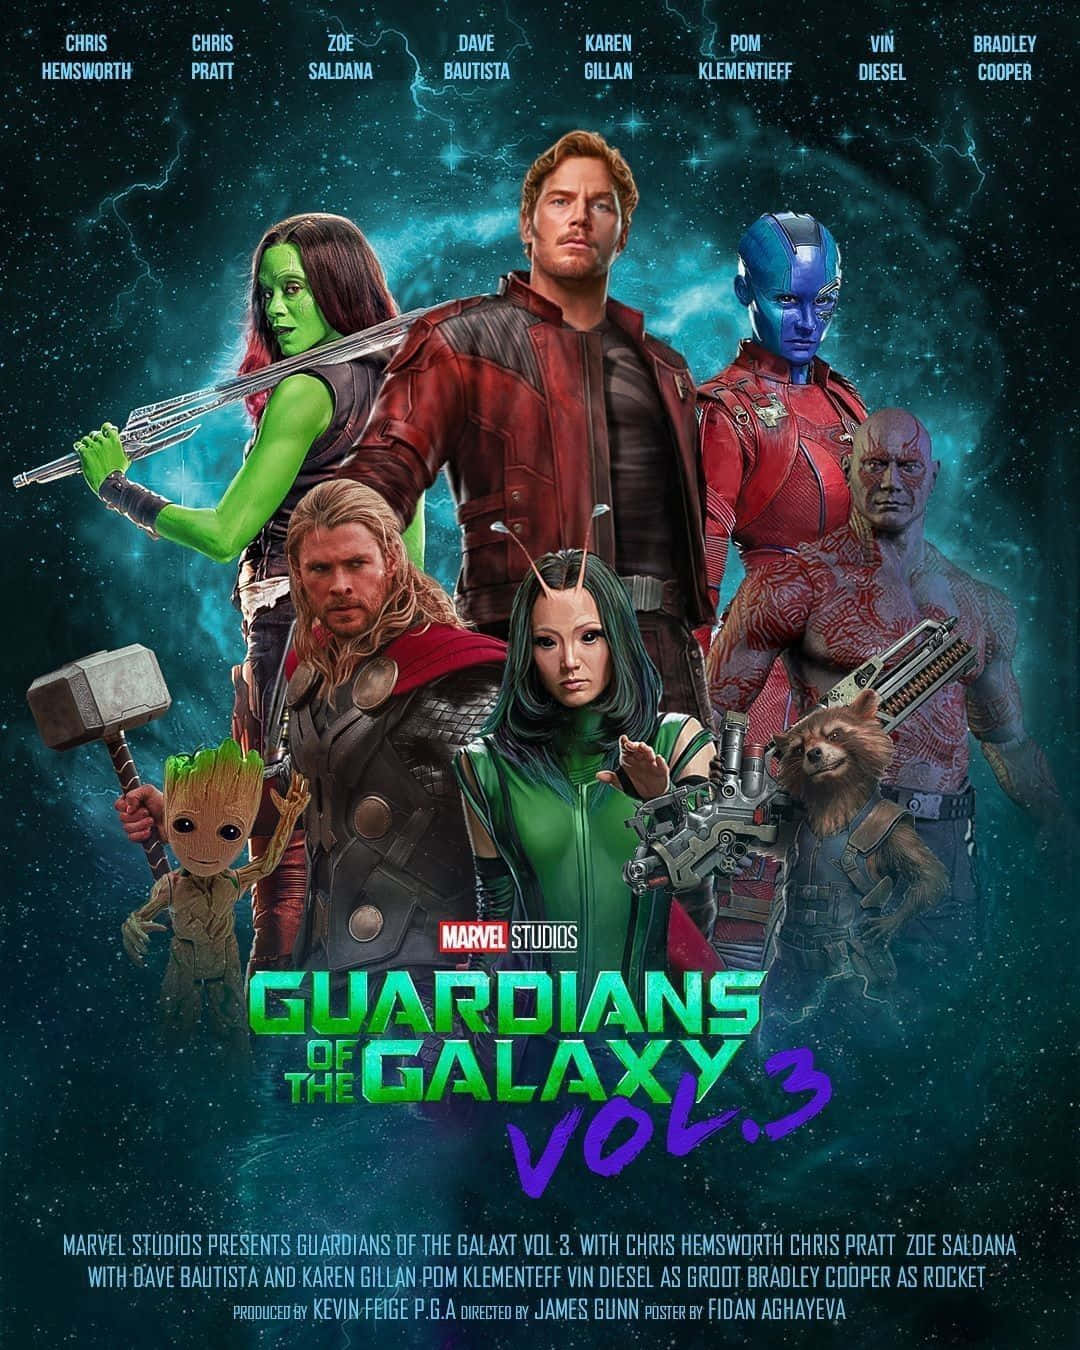 Guardiansofthe Galaxy Vol3 Movie Poster Wallpaper